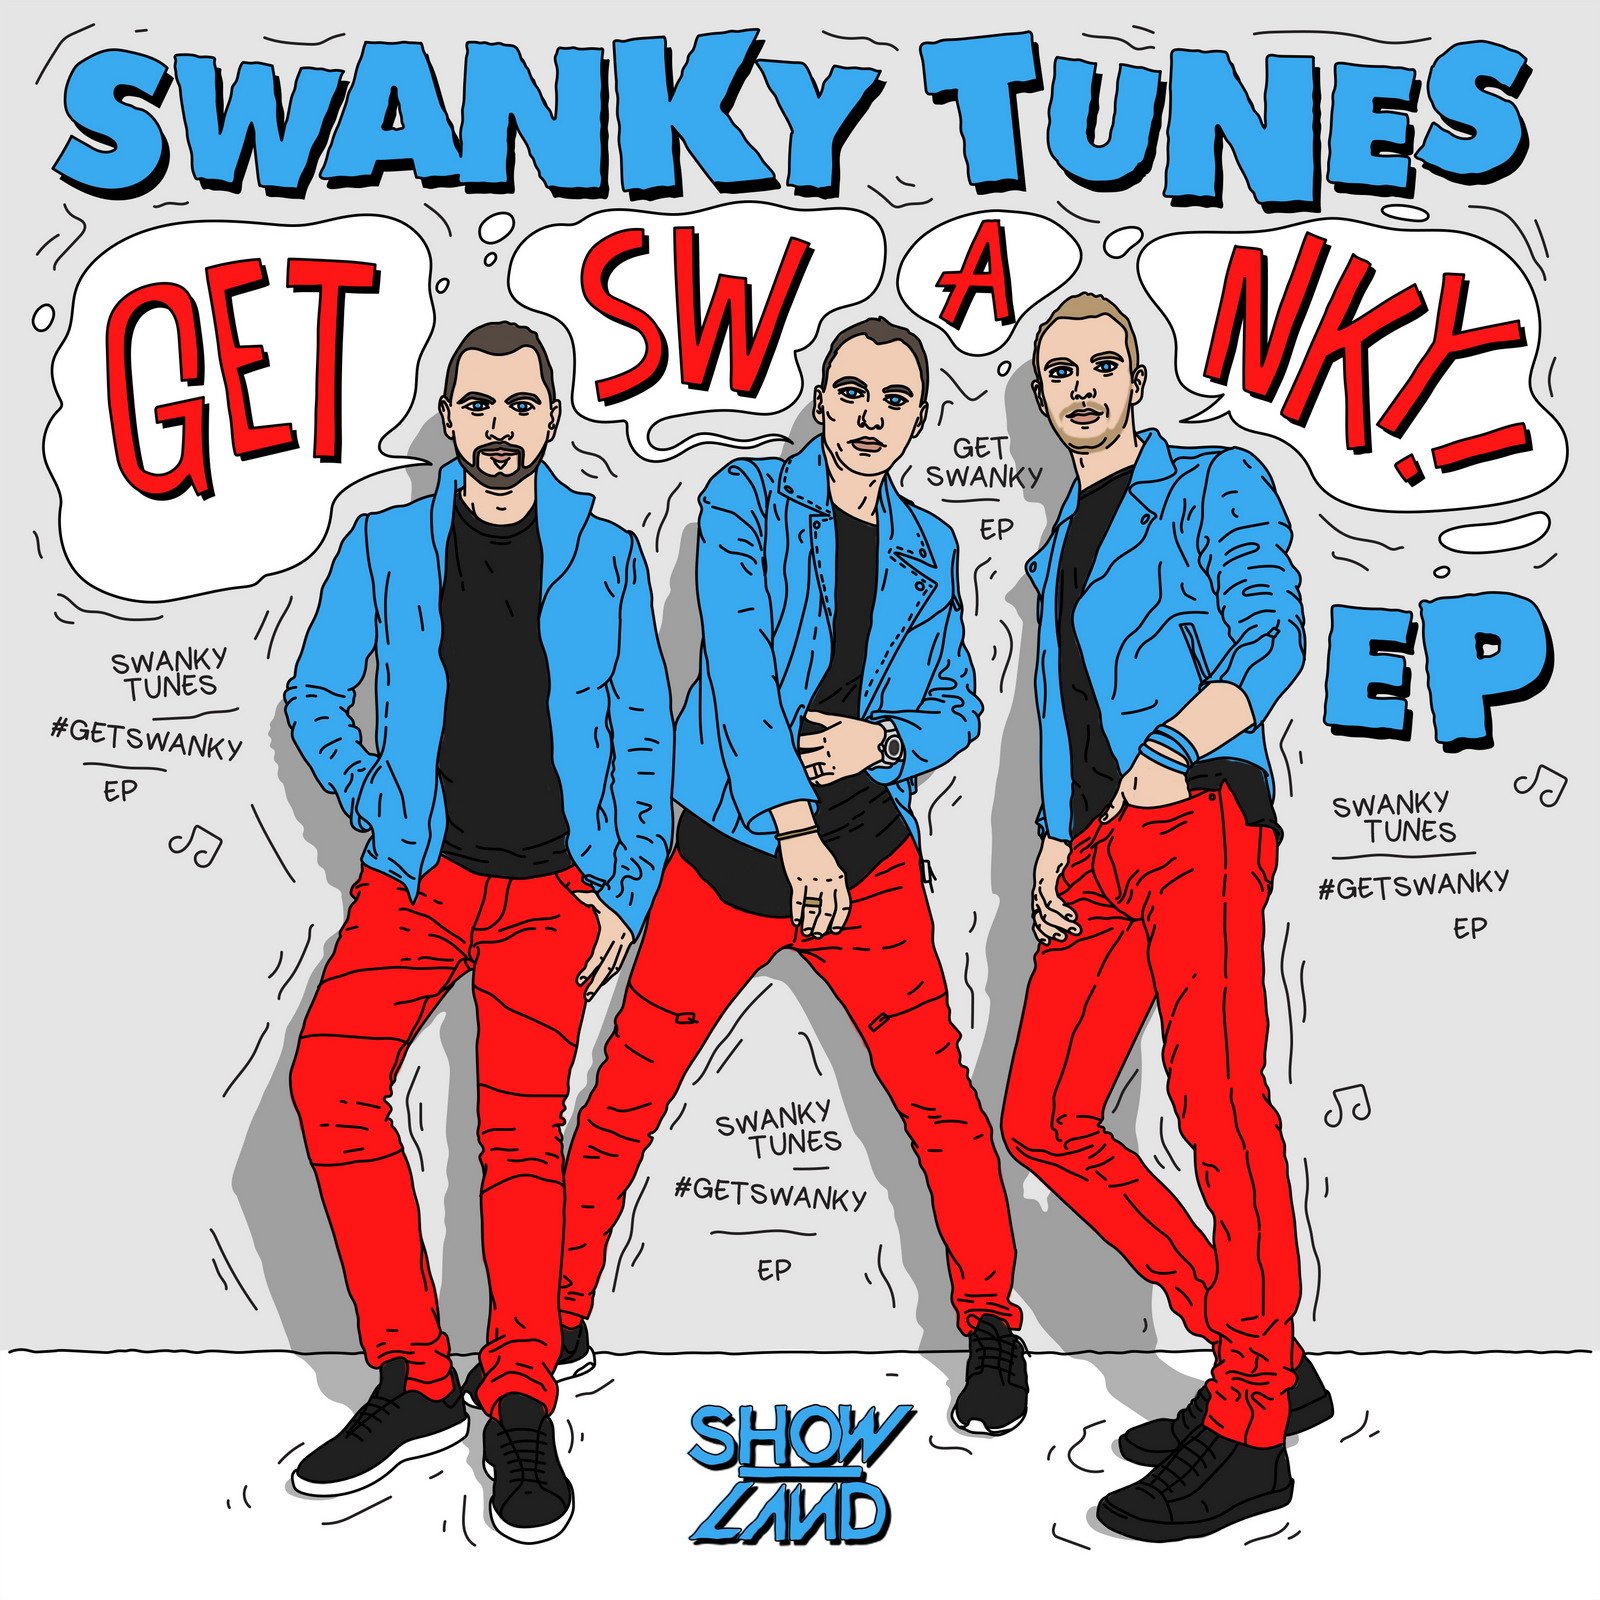 Swanky tunes going. Swanky Tunes. Swanky Tunes обложки. Swanky Tunes Showland.